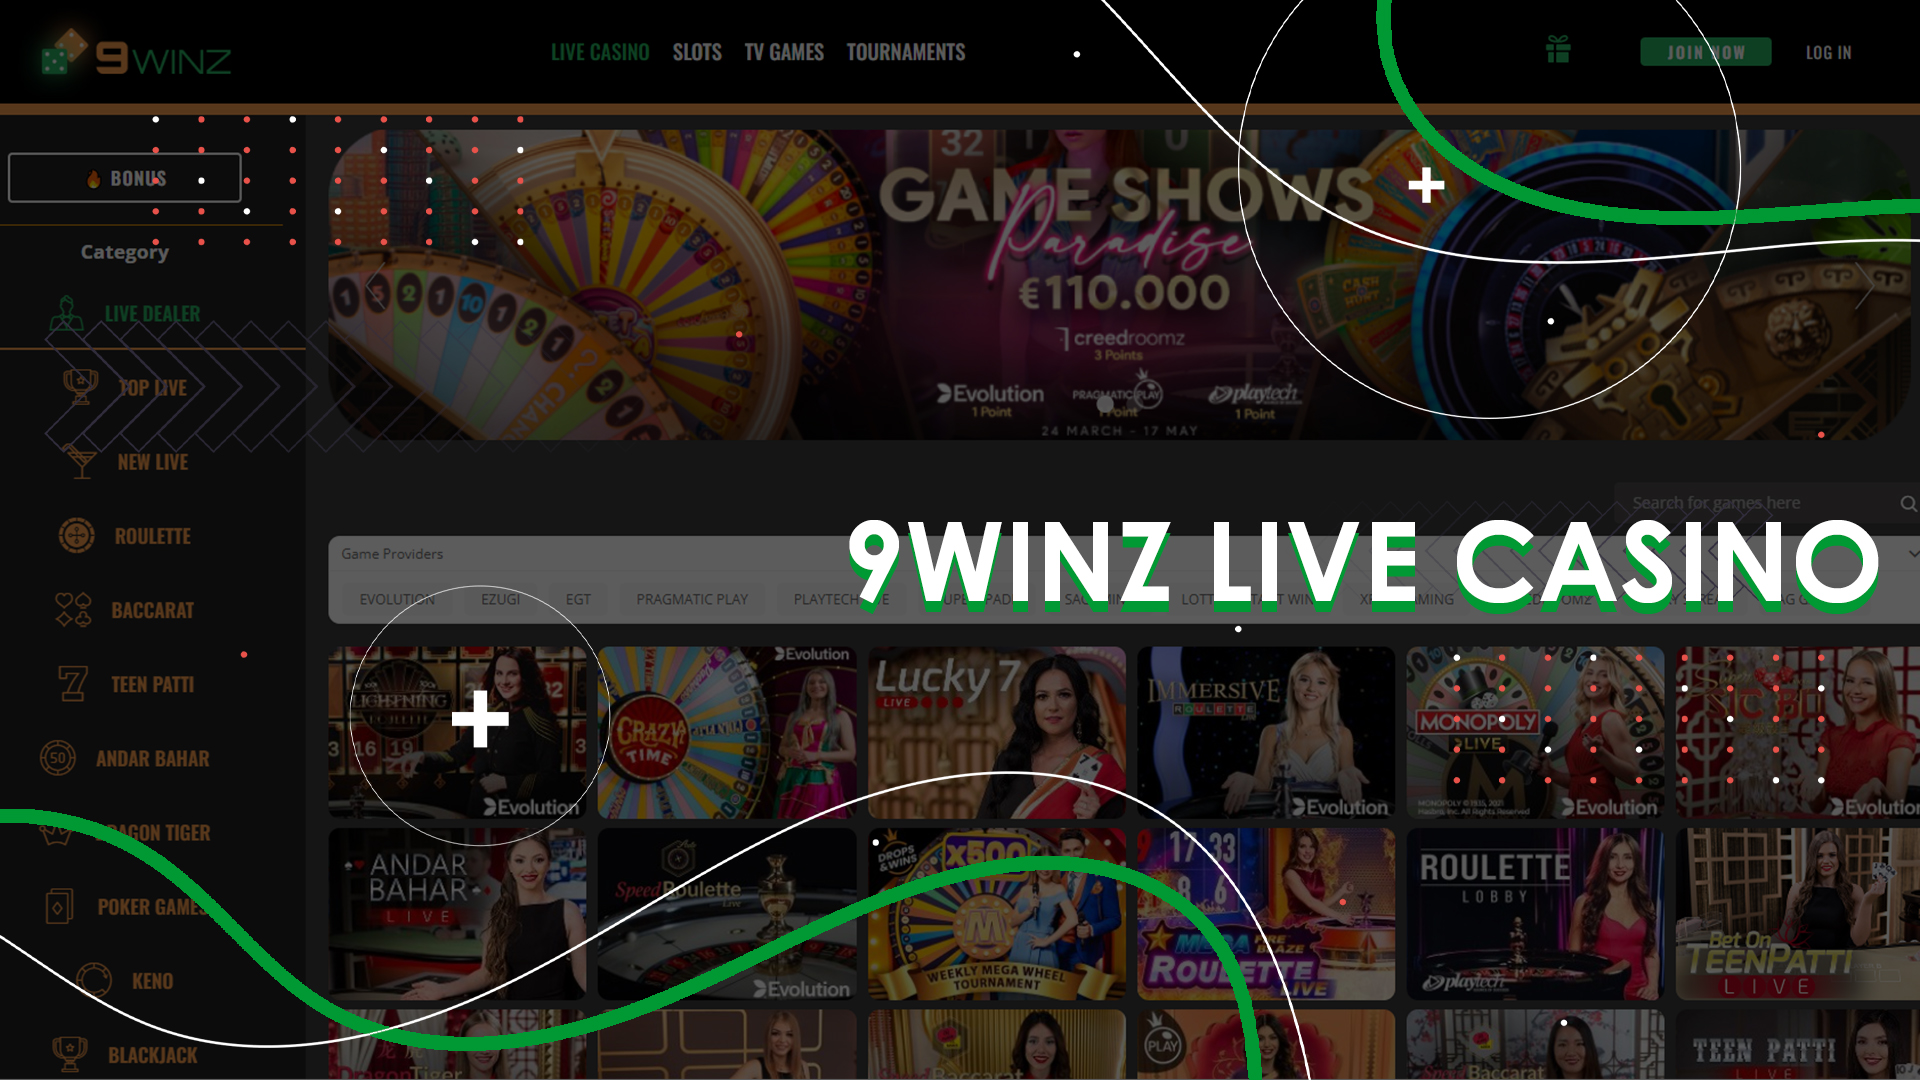 9winz Live Casino